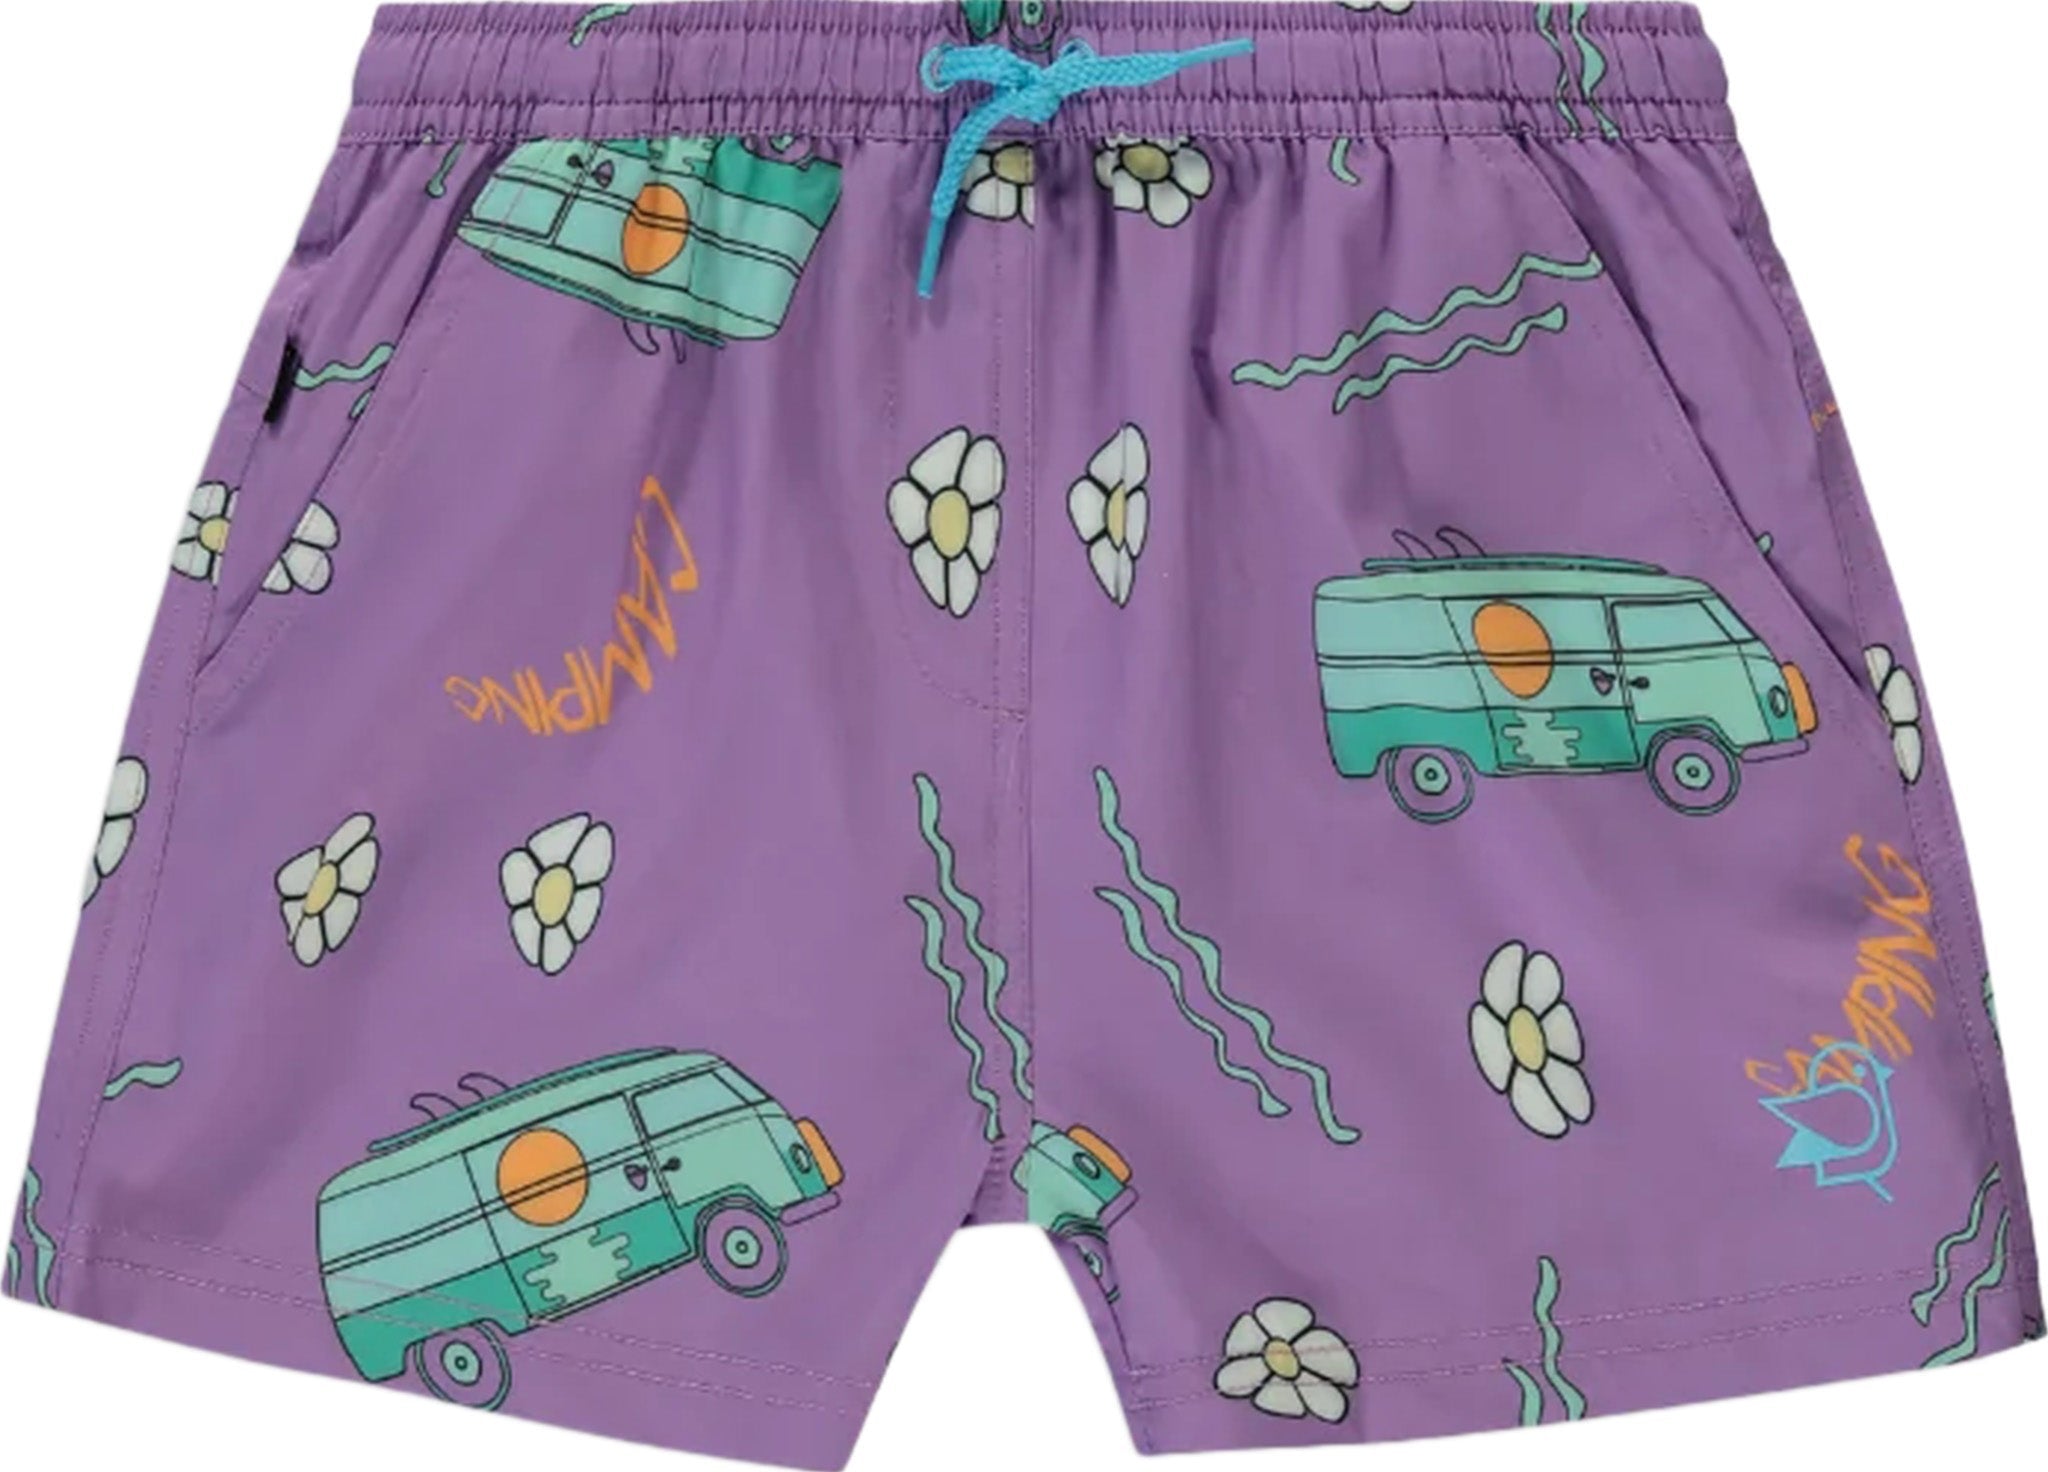 Caravan swim shorts kidz